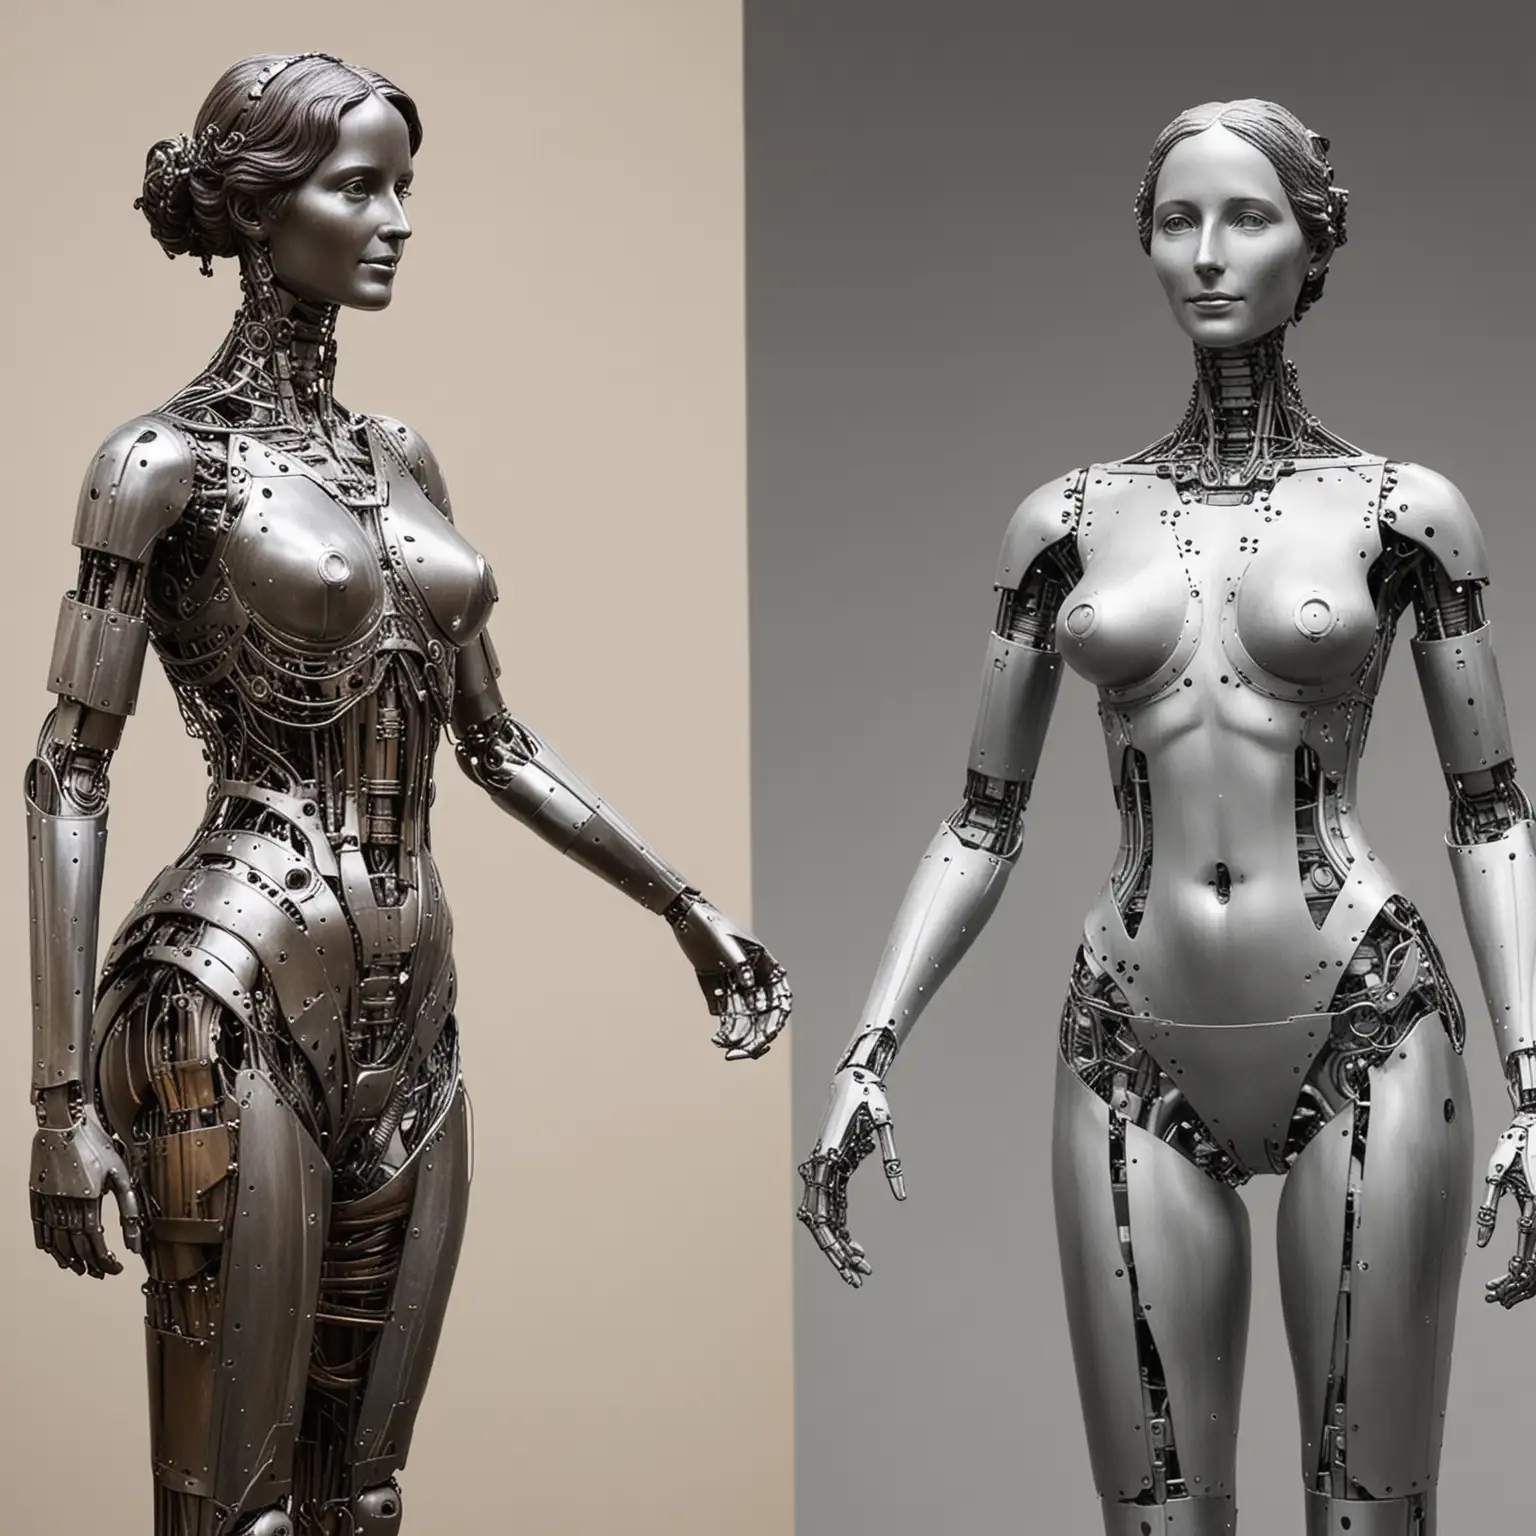 Metal Sculpture of Ada Lovelace HalfNaked Woman and HalfRobot